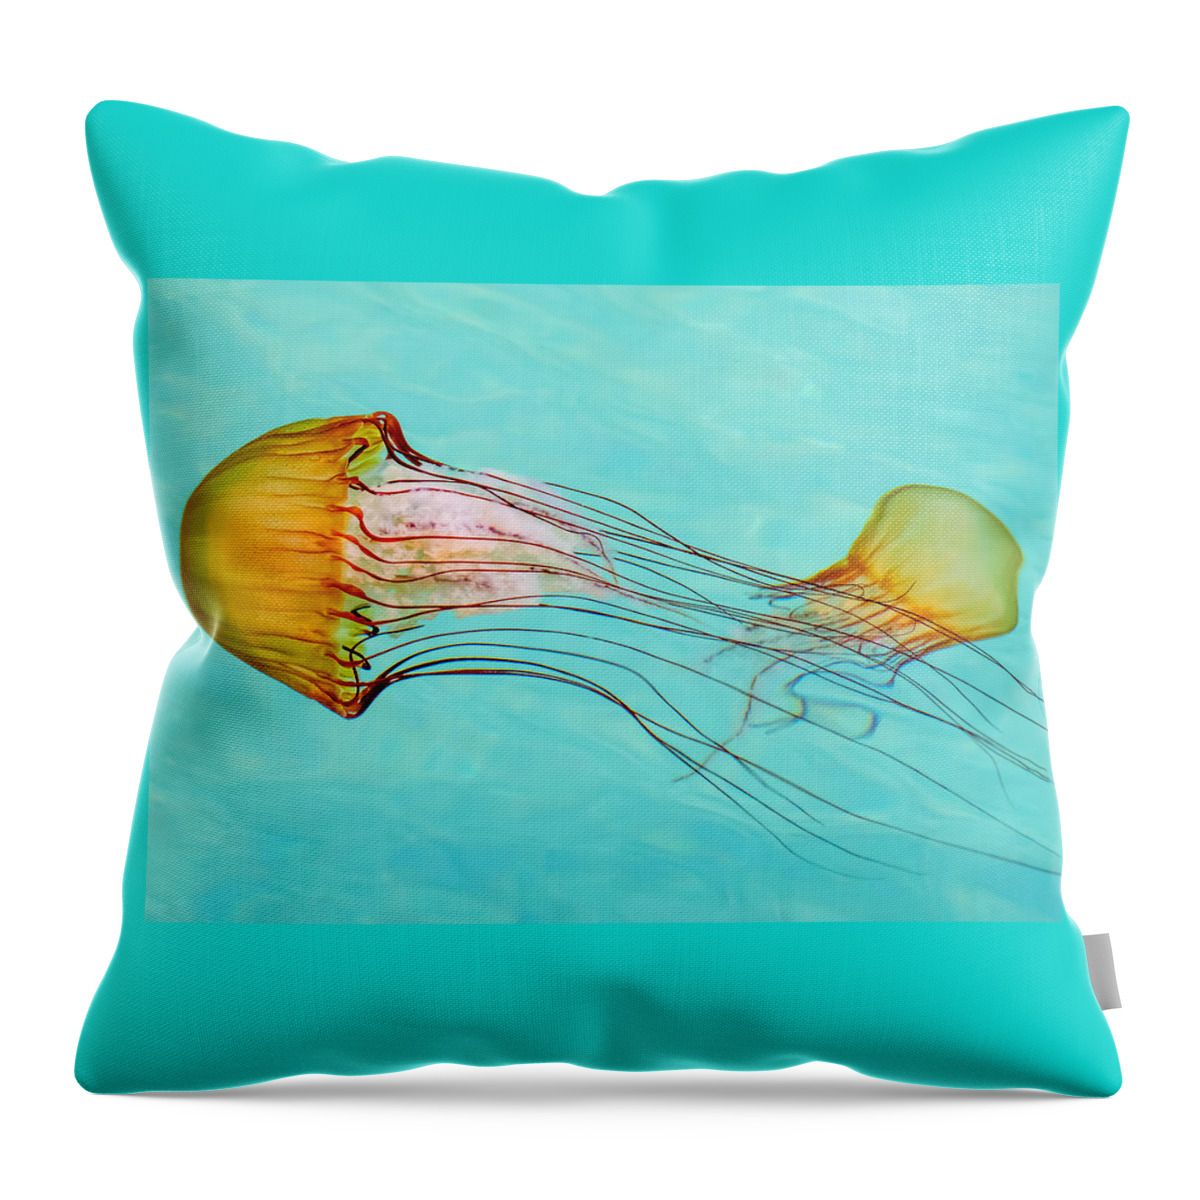 Jelly Fish Throw Pillow featuring the photograph Criss Cross by Derek Dean